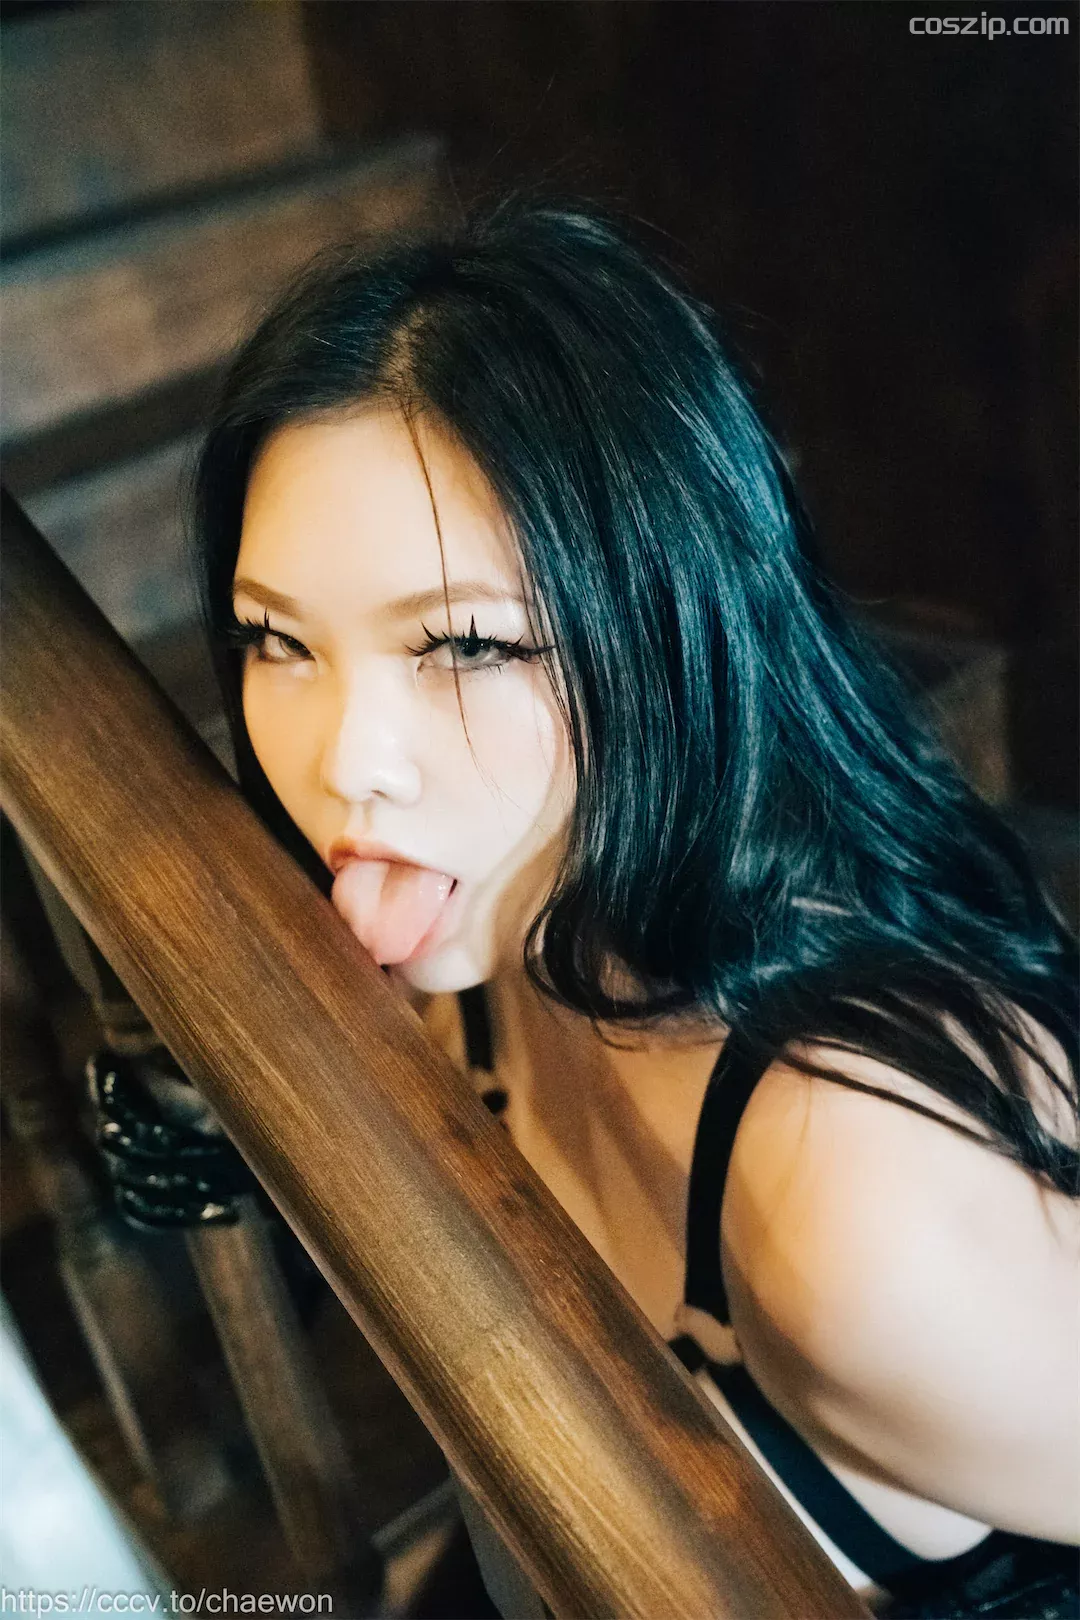 Loozy-Kang-Seonhye-Mistress-coszip.com-082